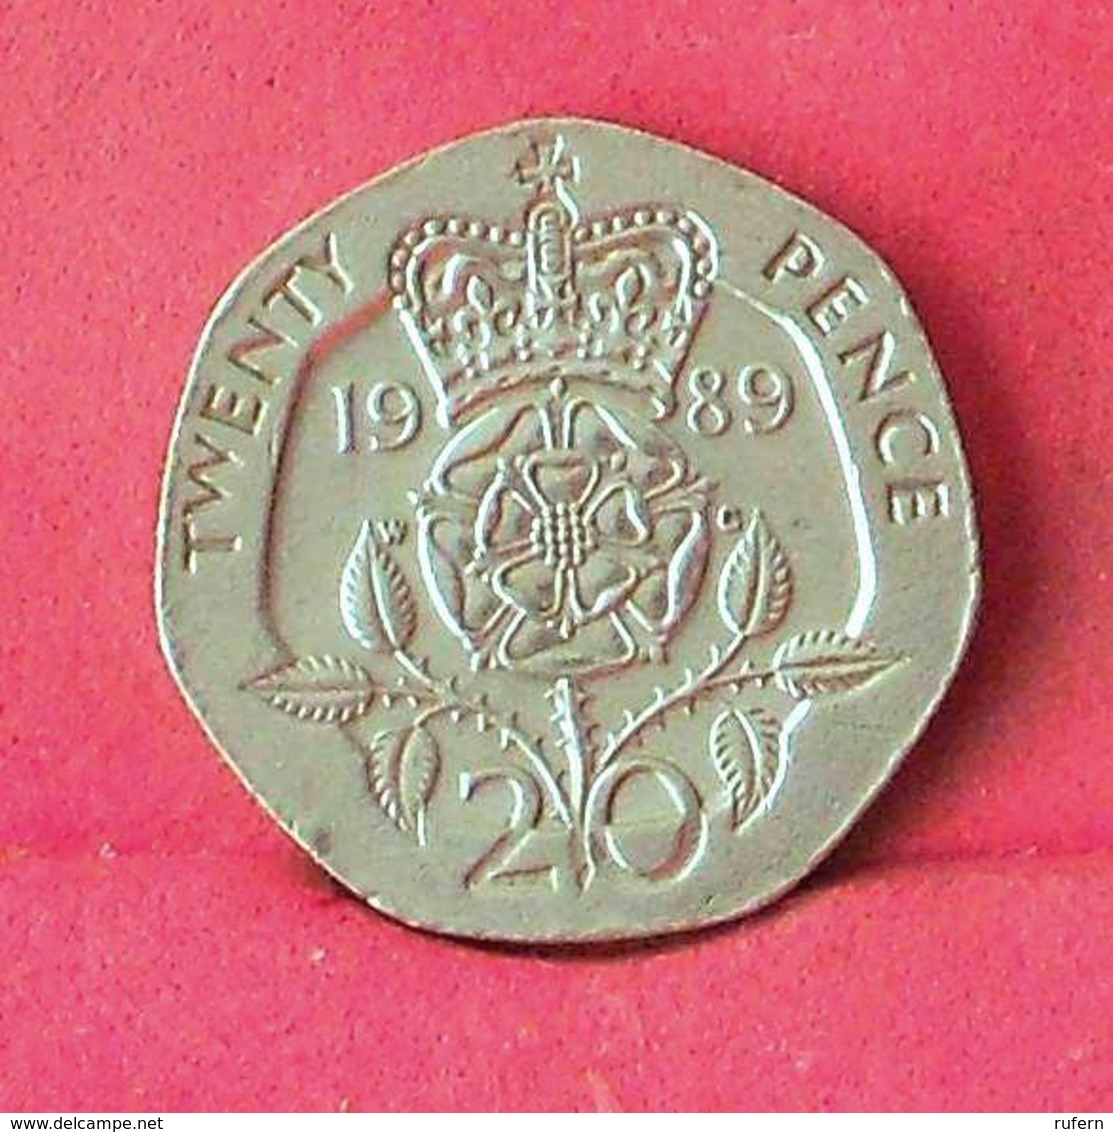 GREAT BRITAIN 20 PENCES 1989 -    KM# 939 - (Nº27585) - 20 Pence